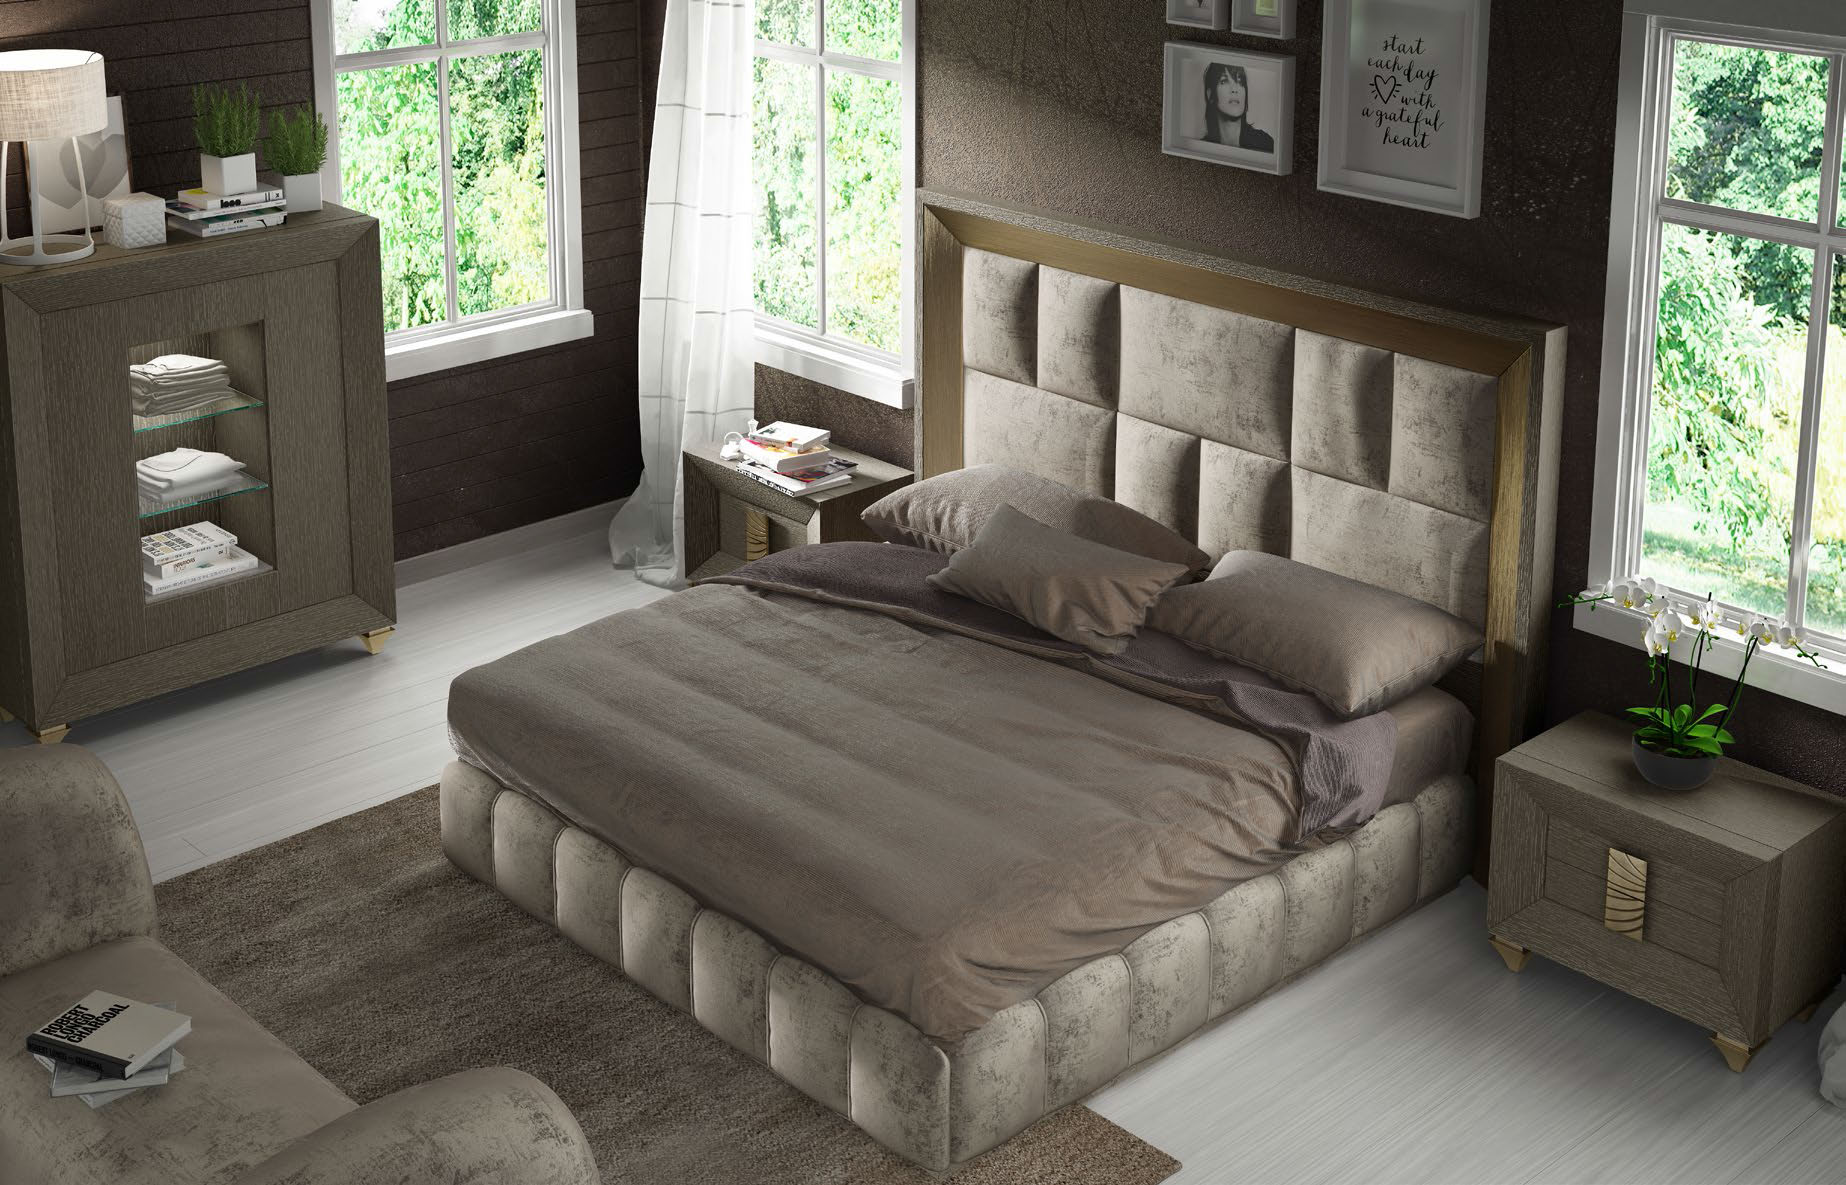 Brands Franco Furniture Bedrooms vol3, Spain DOR 111